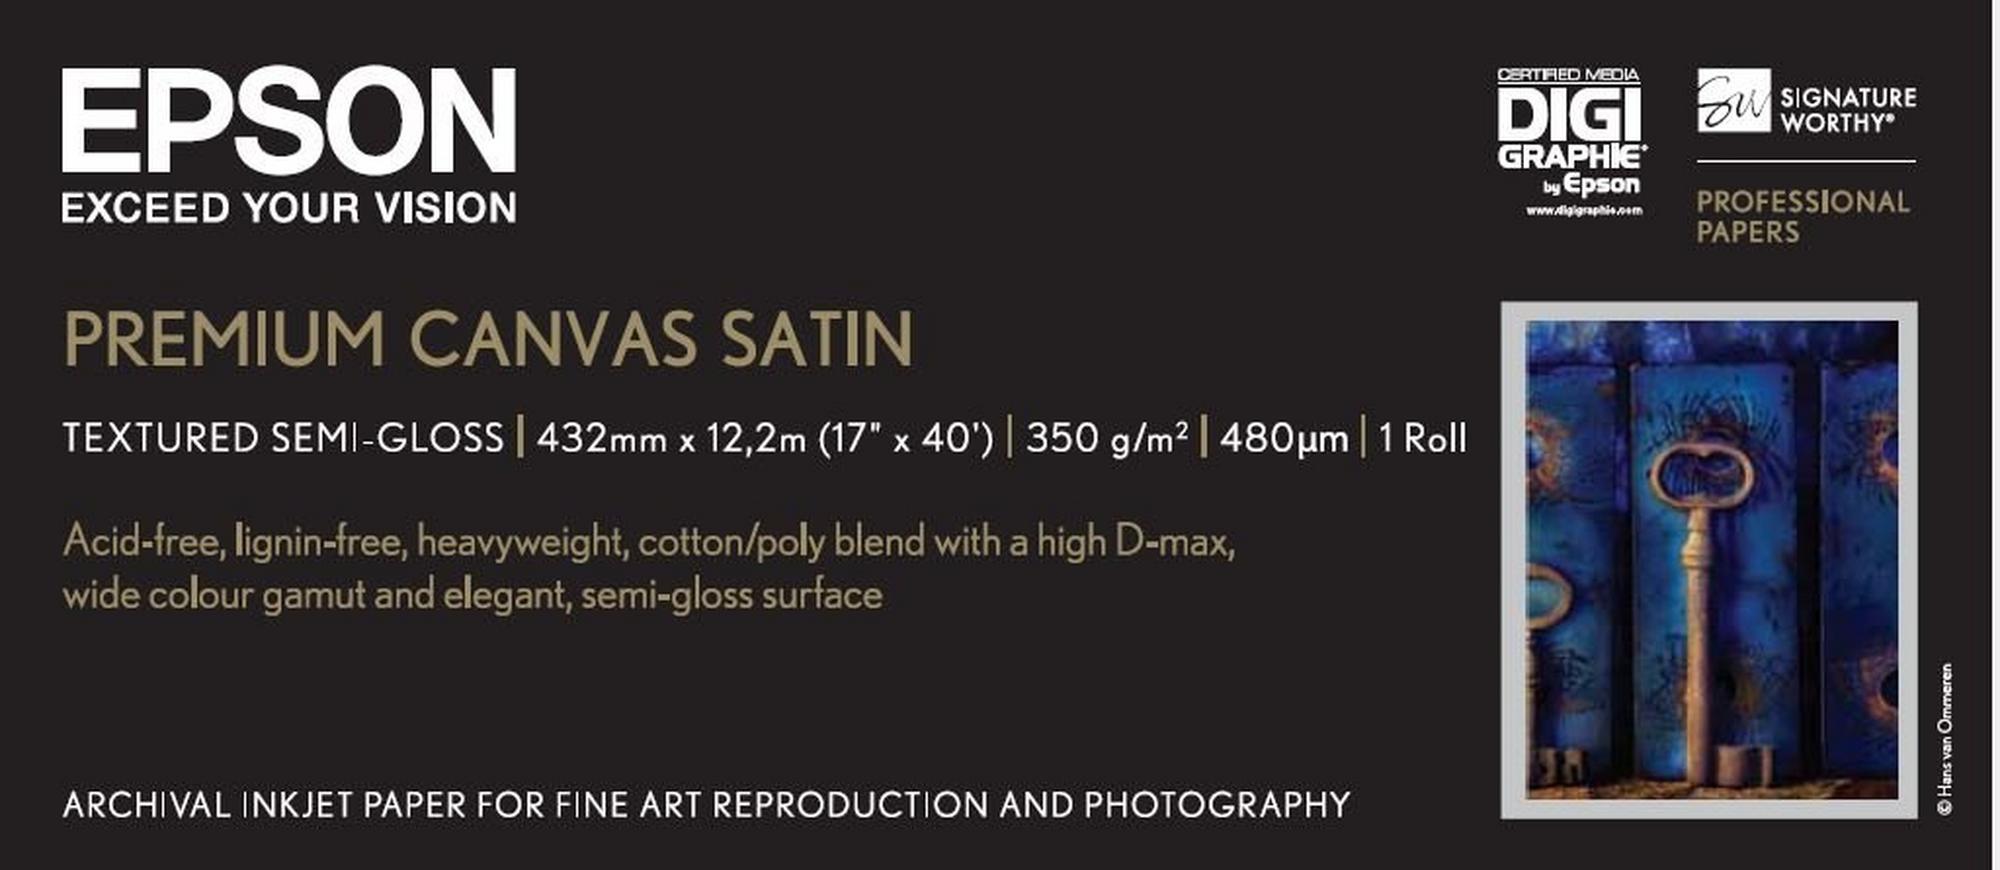 Epson Premium Canvas Satin, 17" x 12.2m, 350g/m²